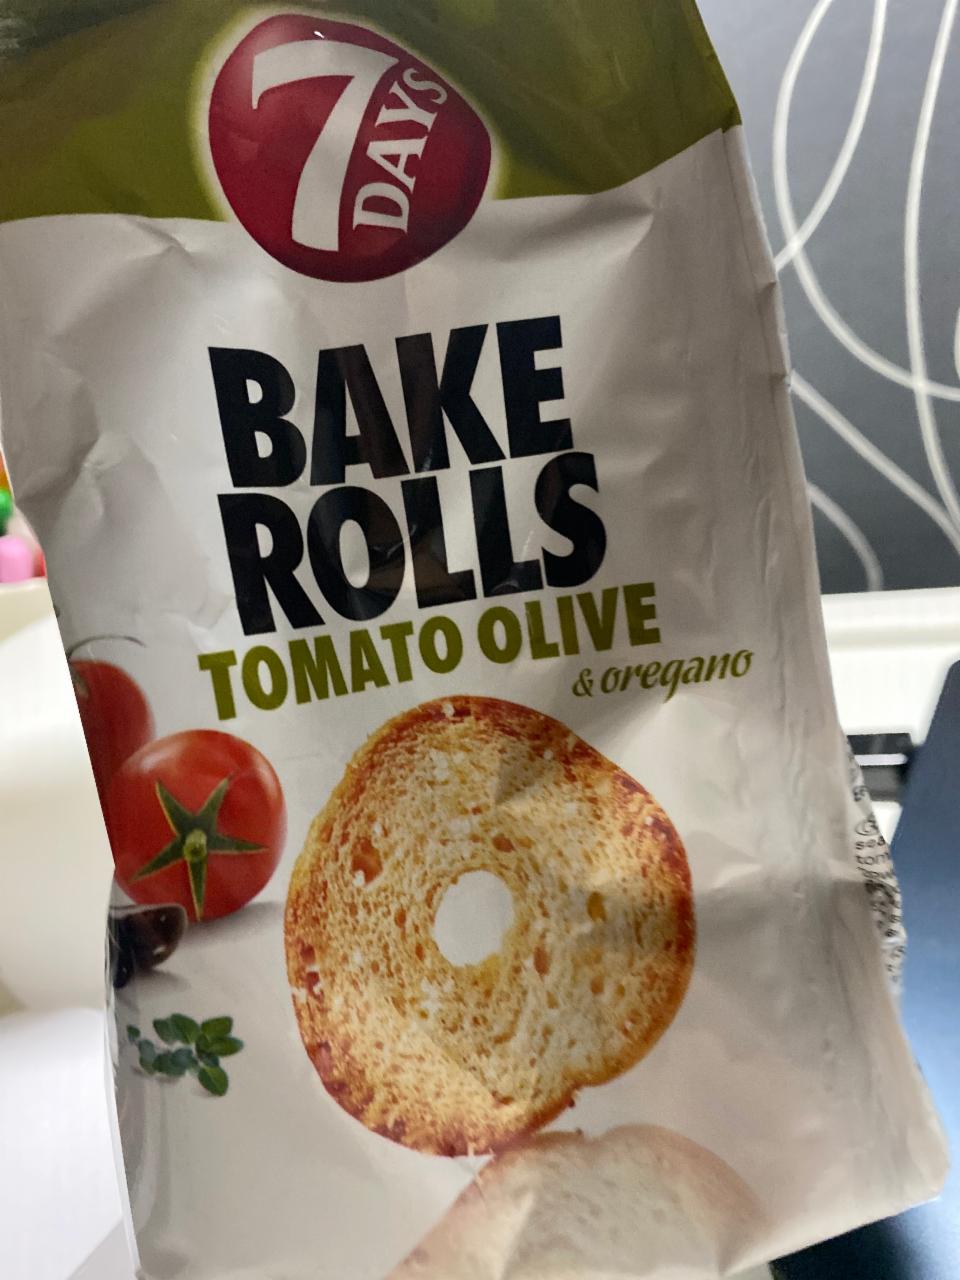 Fotografie - Bake rolls tomato olive & oregano 7 Days